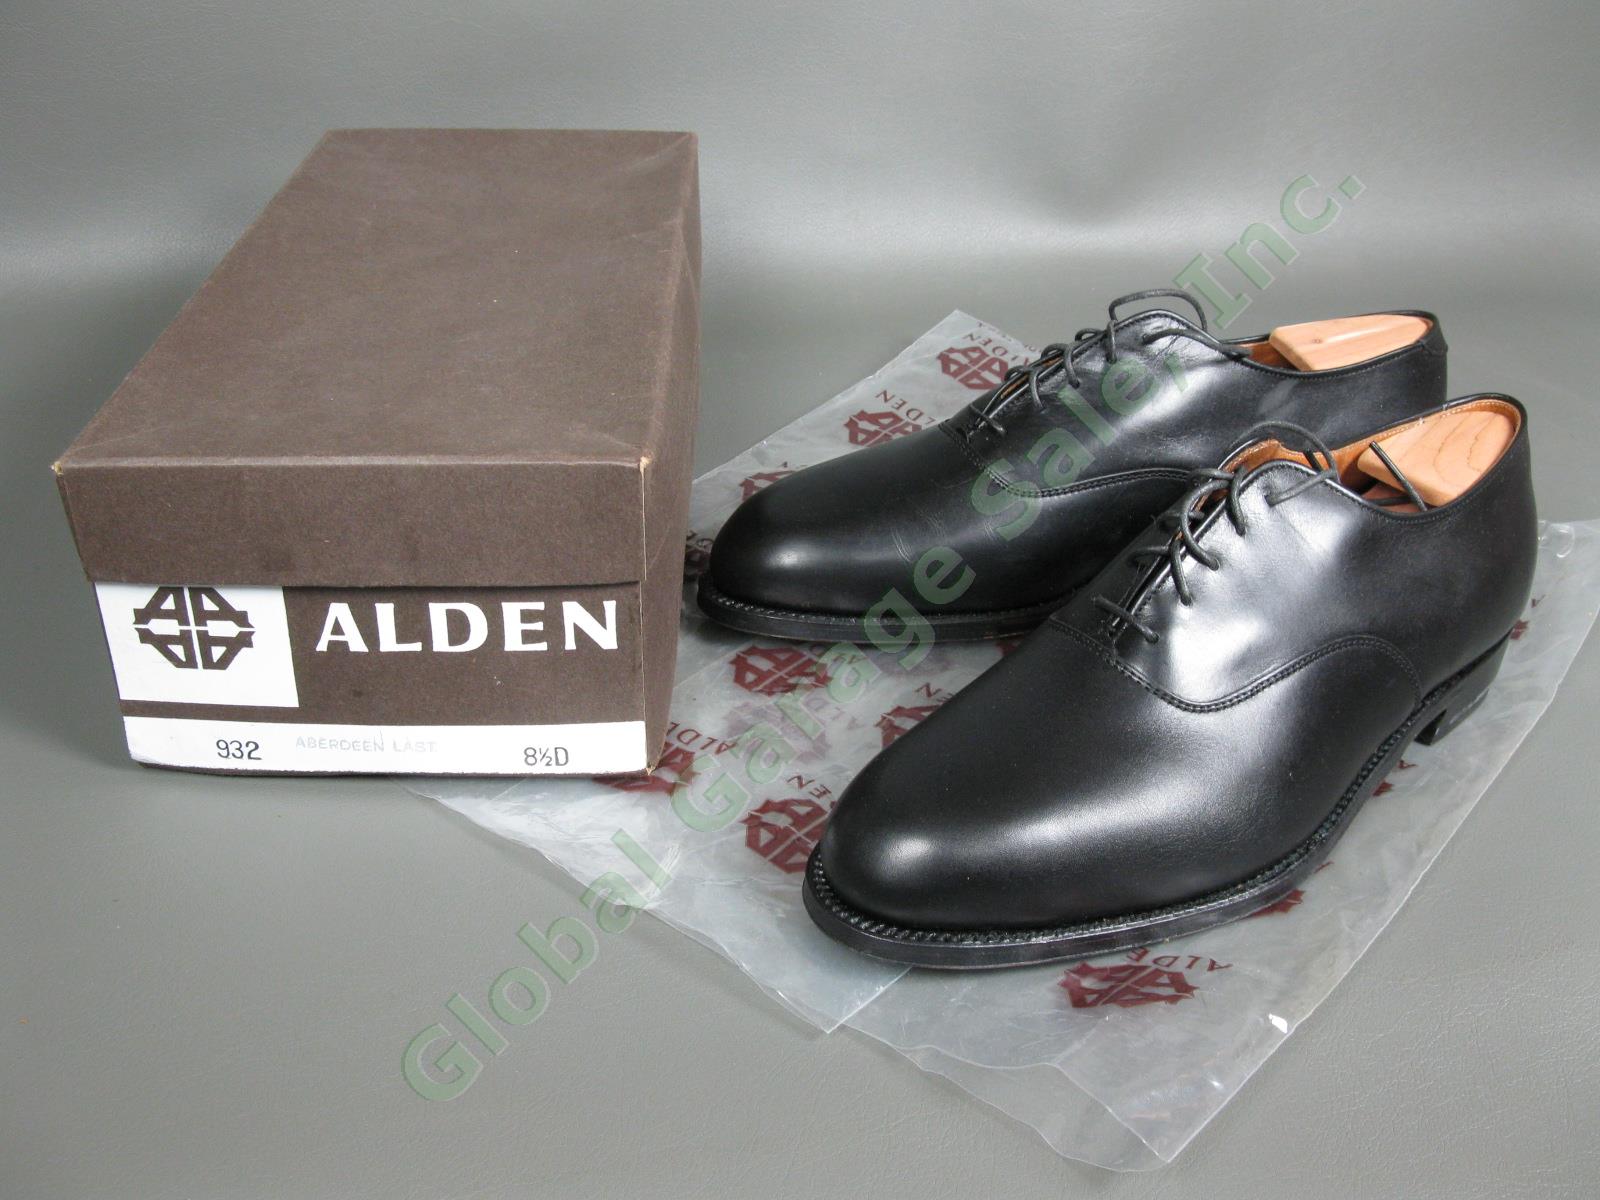 Alden 932 Aberdeen Last Black Leather Cap Toe Straight Tip Dress Shoe Mens 8.5D